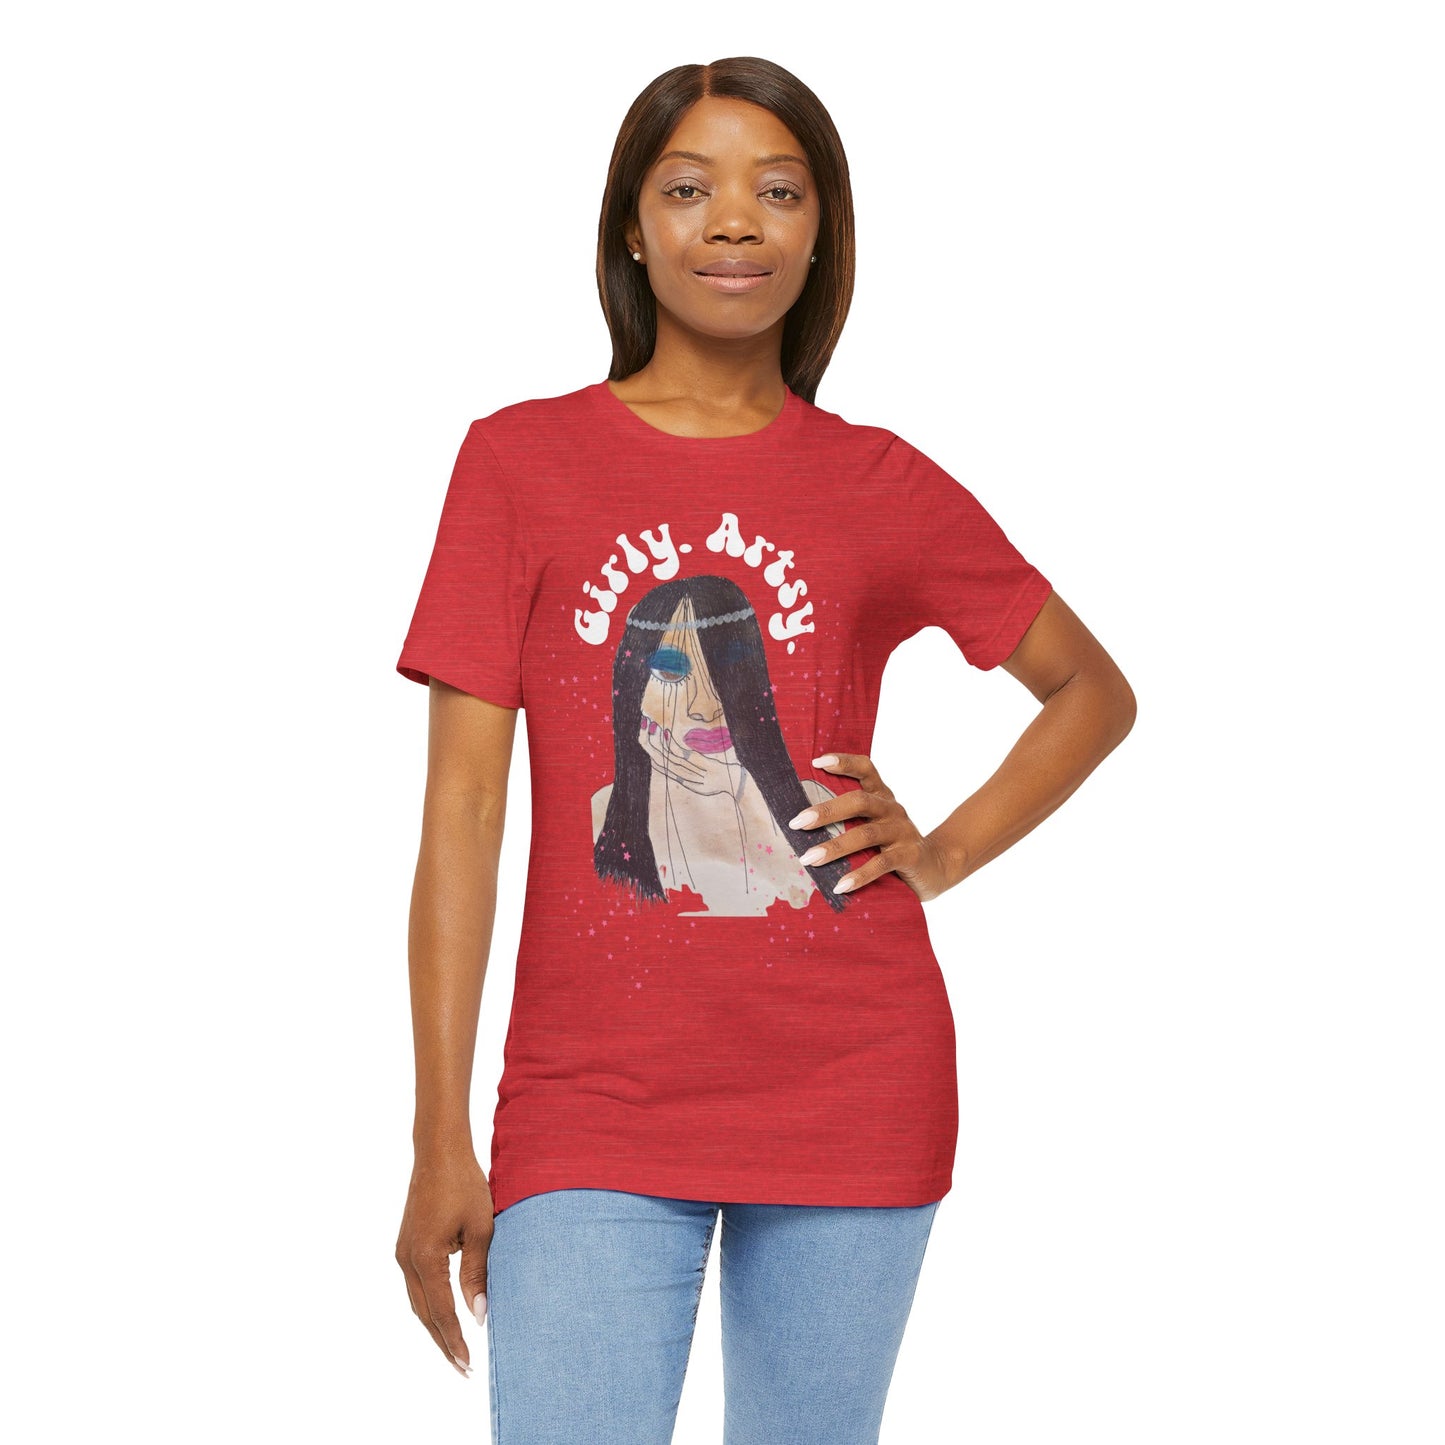 GIRLY. ARTSY. #5, Hand Painted Graphic T-shirt, Women's T-shirt, Black Art Graphic, Black Woman Graphic, Hand-painted Graphic, Retro, Gift for Her, Urban Fashion, Urban Streetstyle, Unisex Jersey Short Sleeve Tee